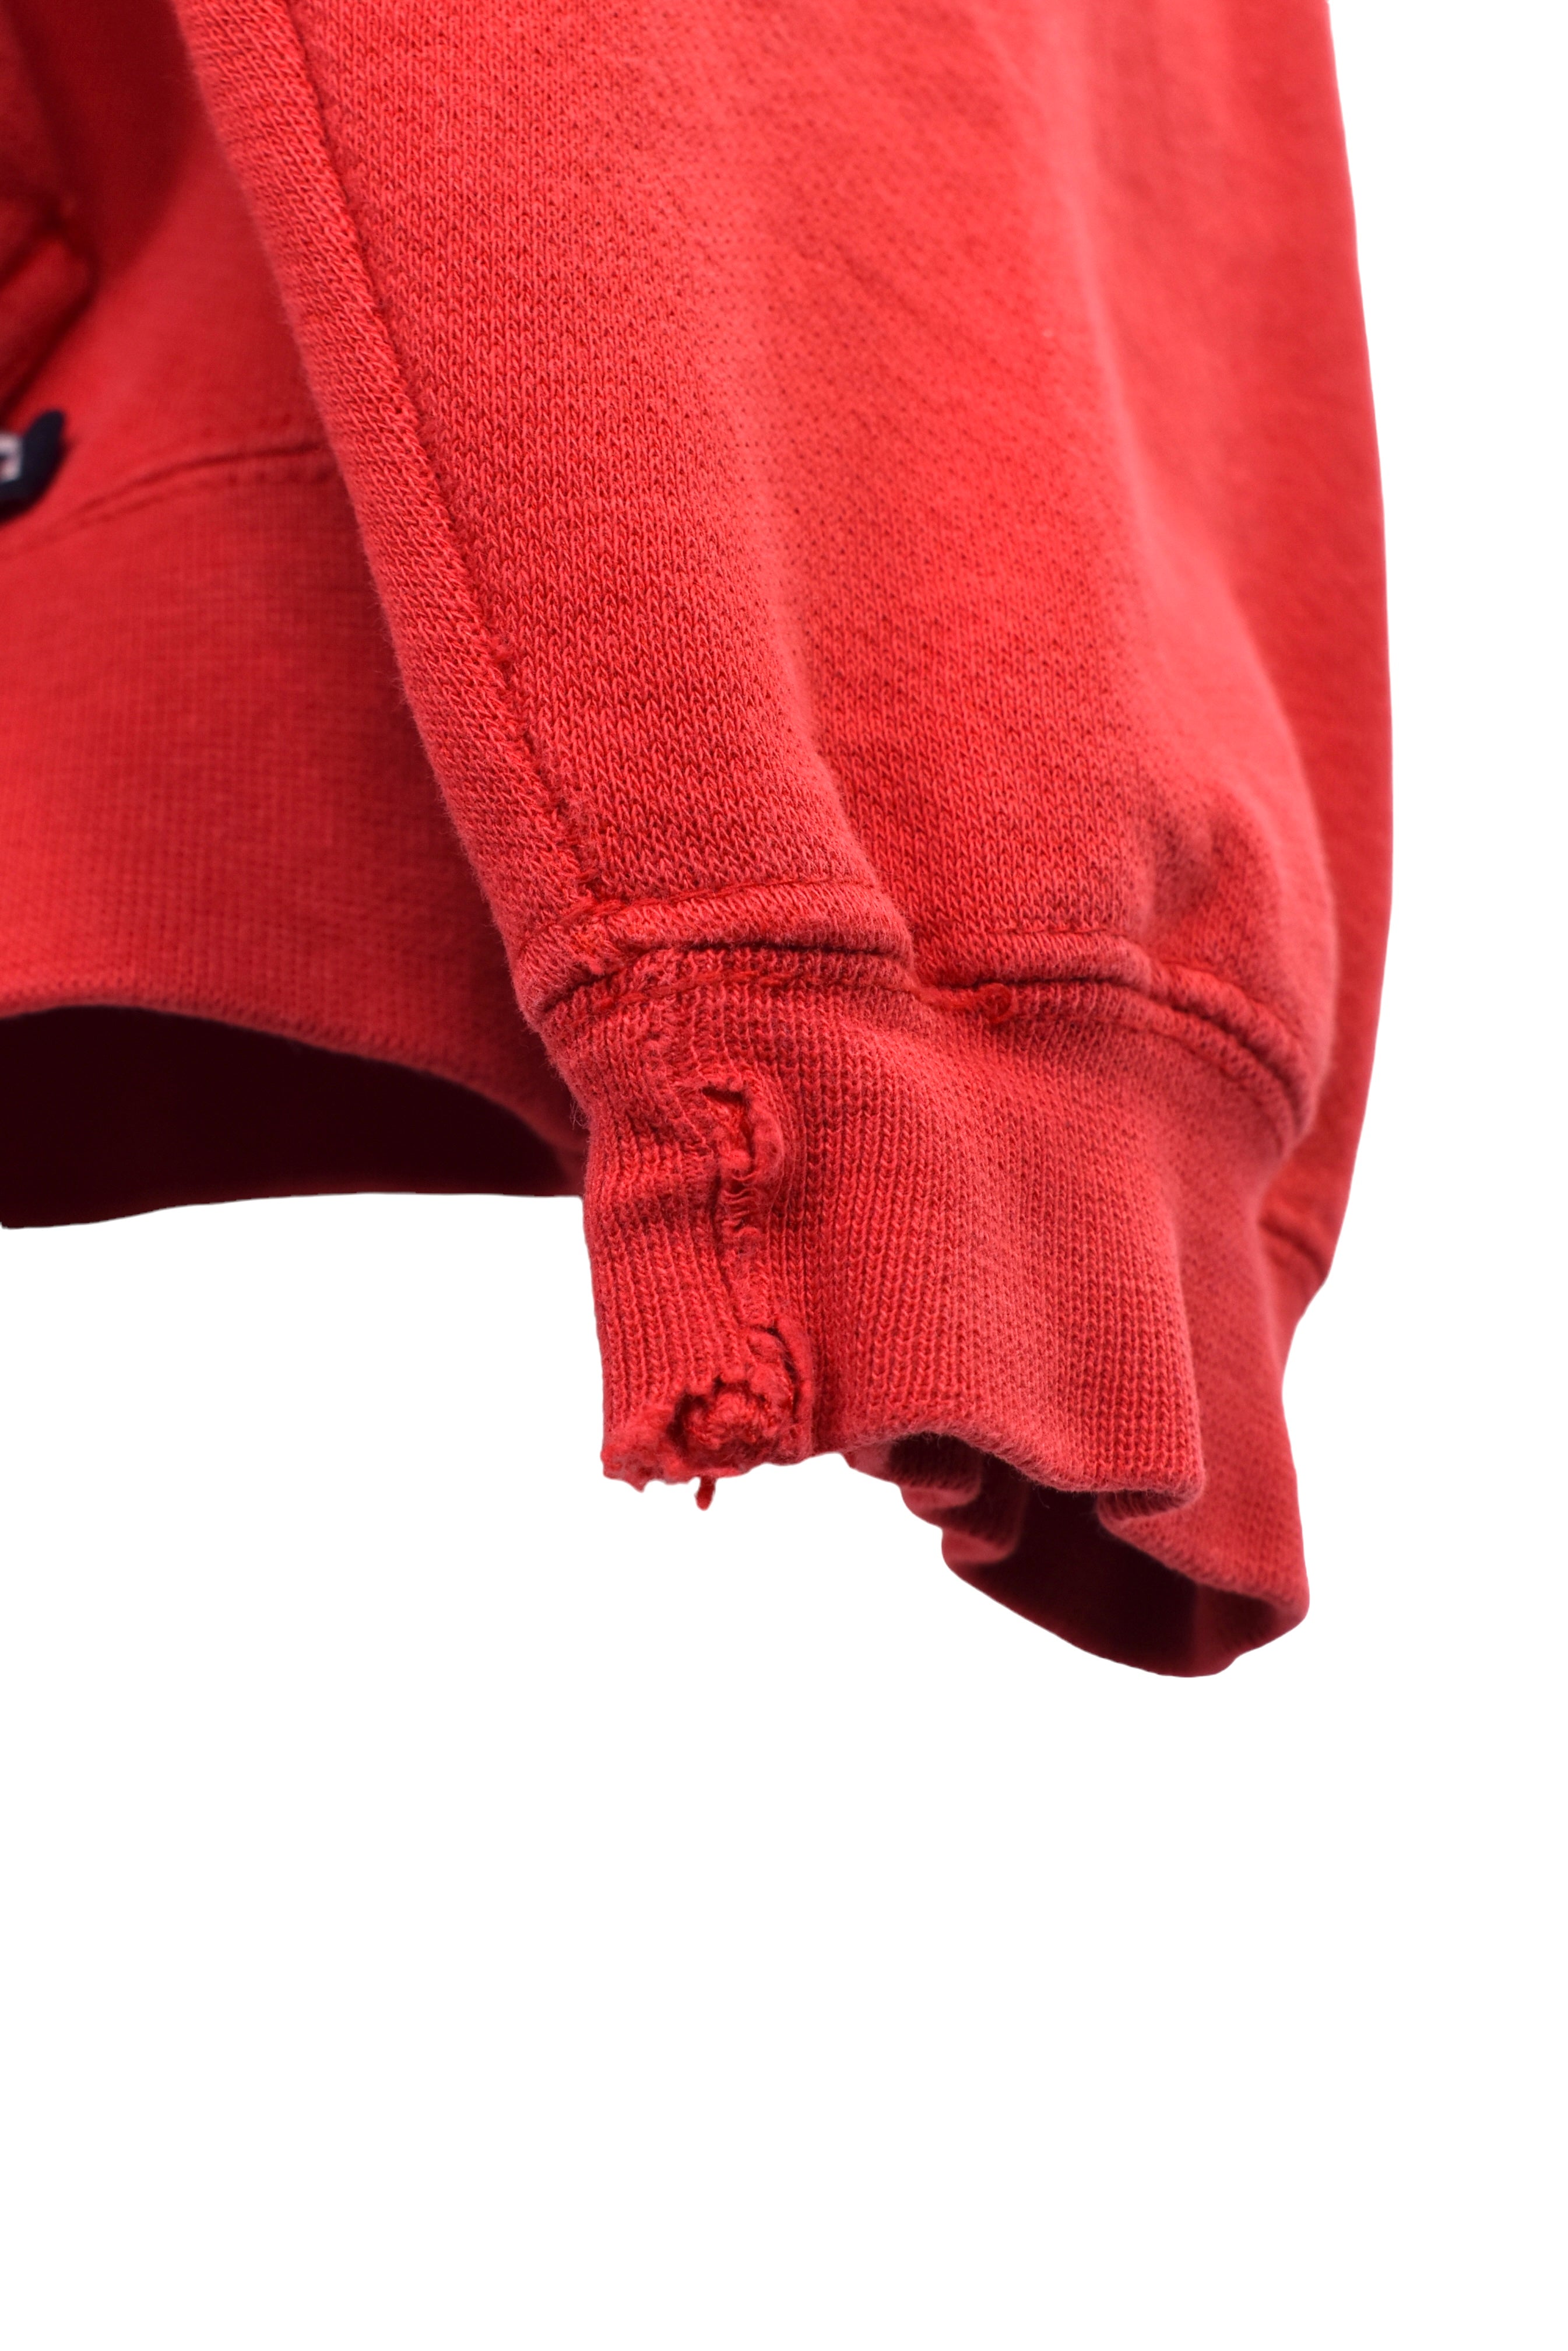 Vintage Ohio State University hoodie, red embroidered sweatshirt - Large